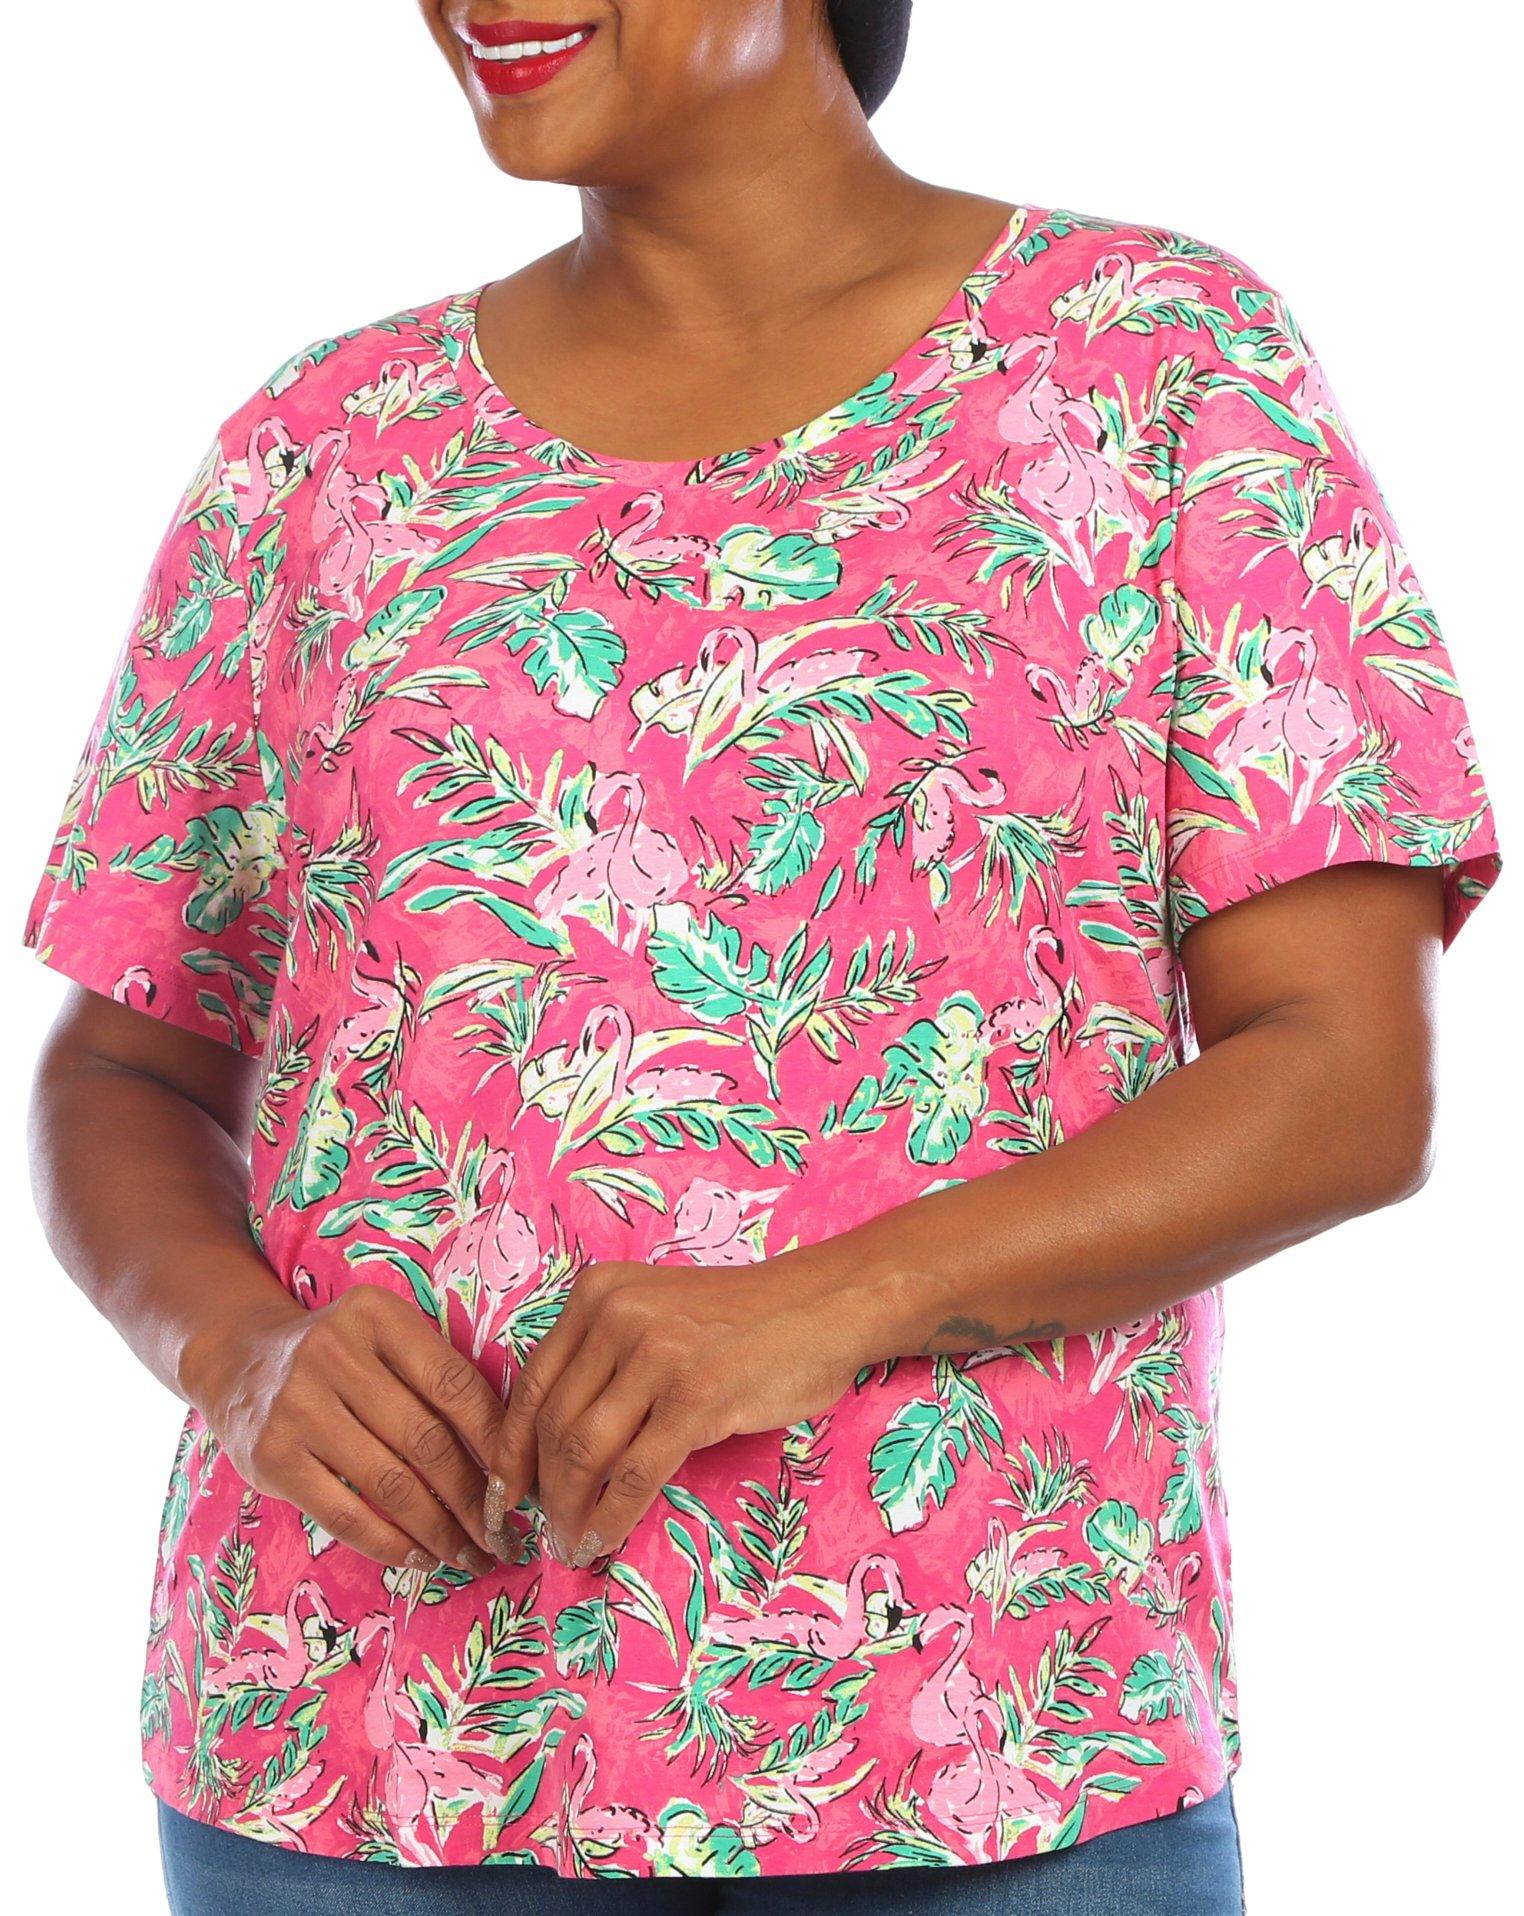 Coral Bay Plus Flamingo Print Short Sleeve Top